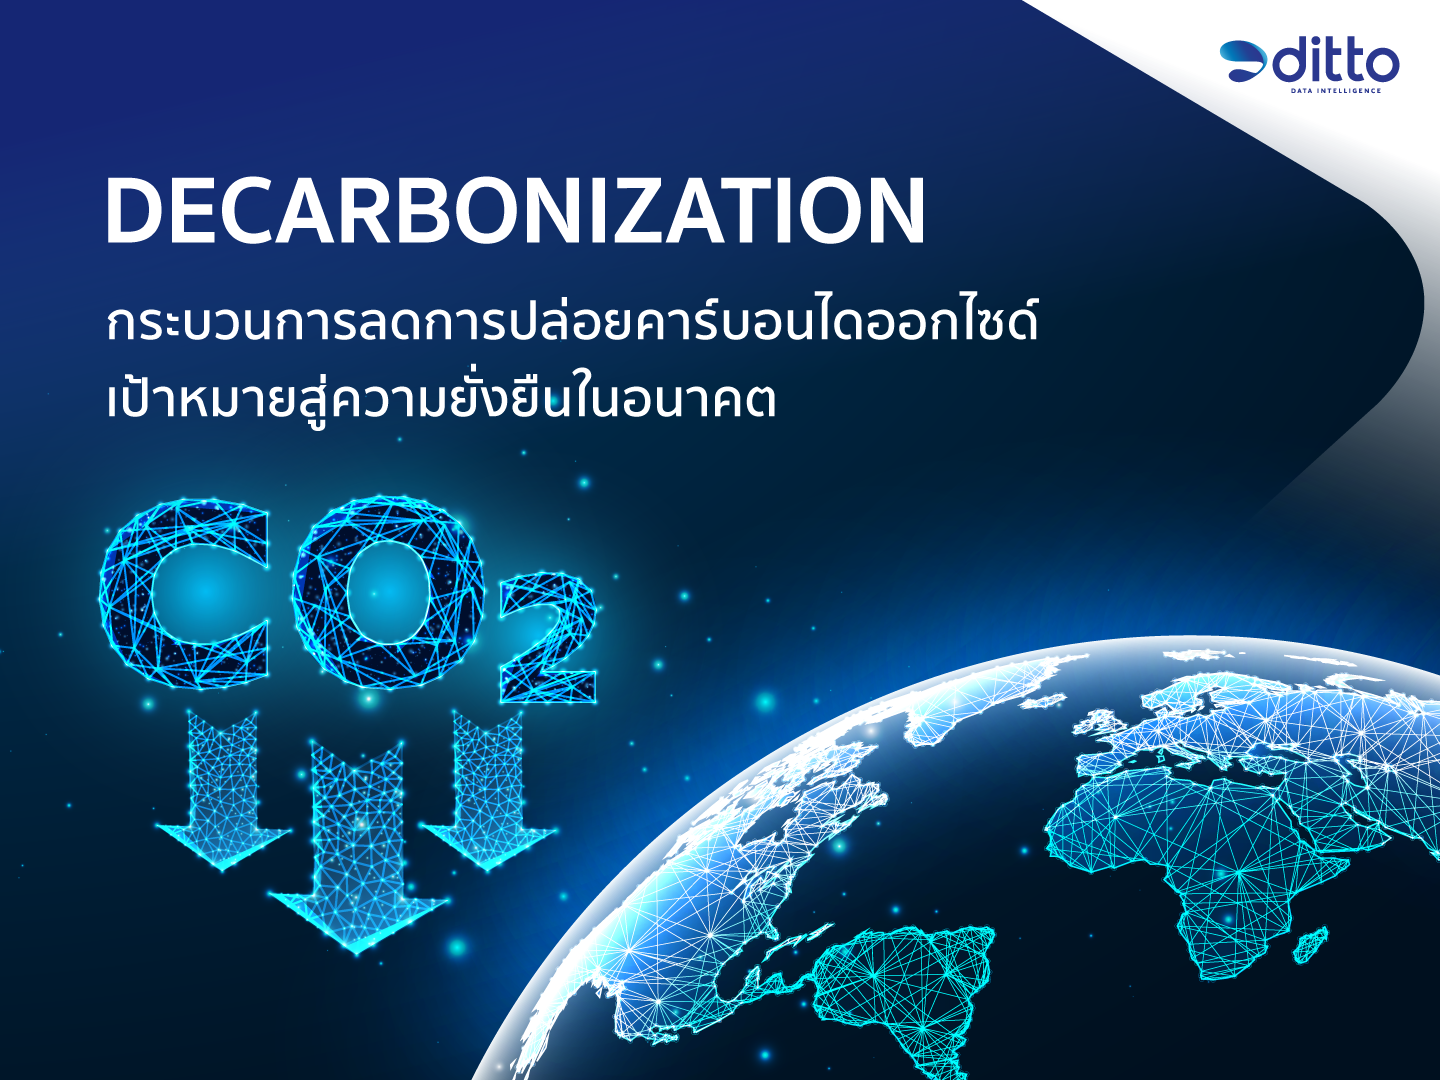 Decarbonization